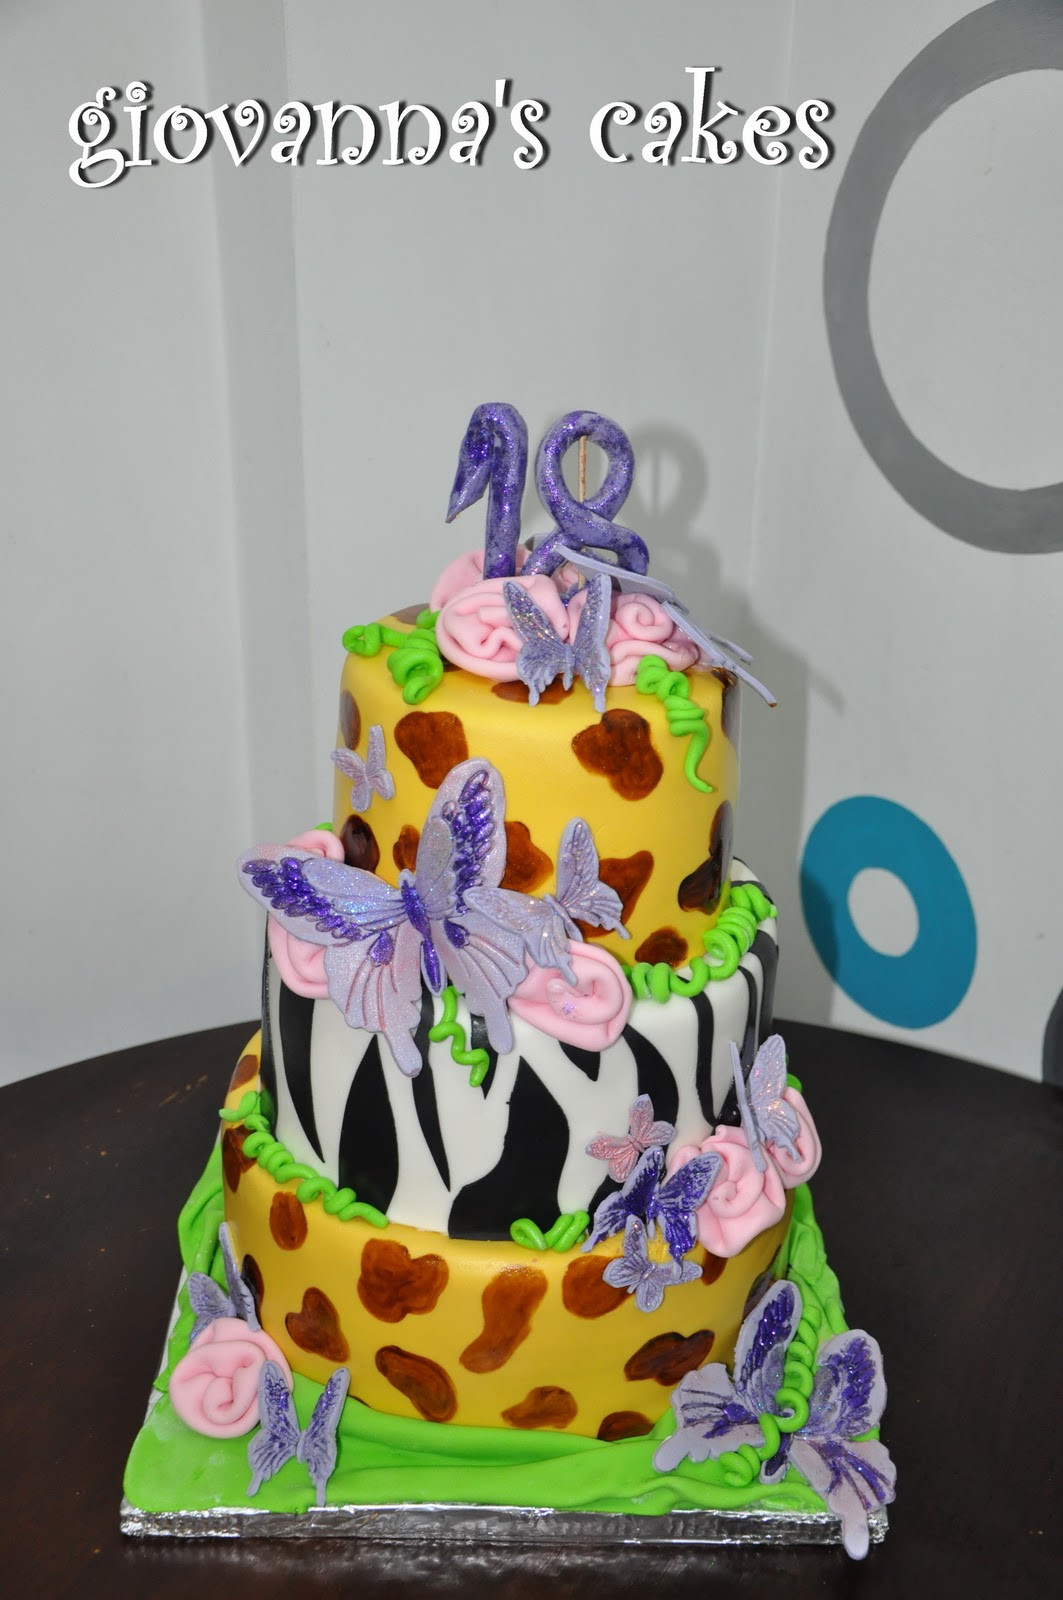 18 Year Old Birthday Cakes
 giovanna s cakes 18 years old birthday cake